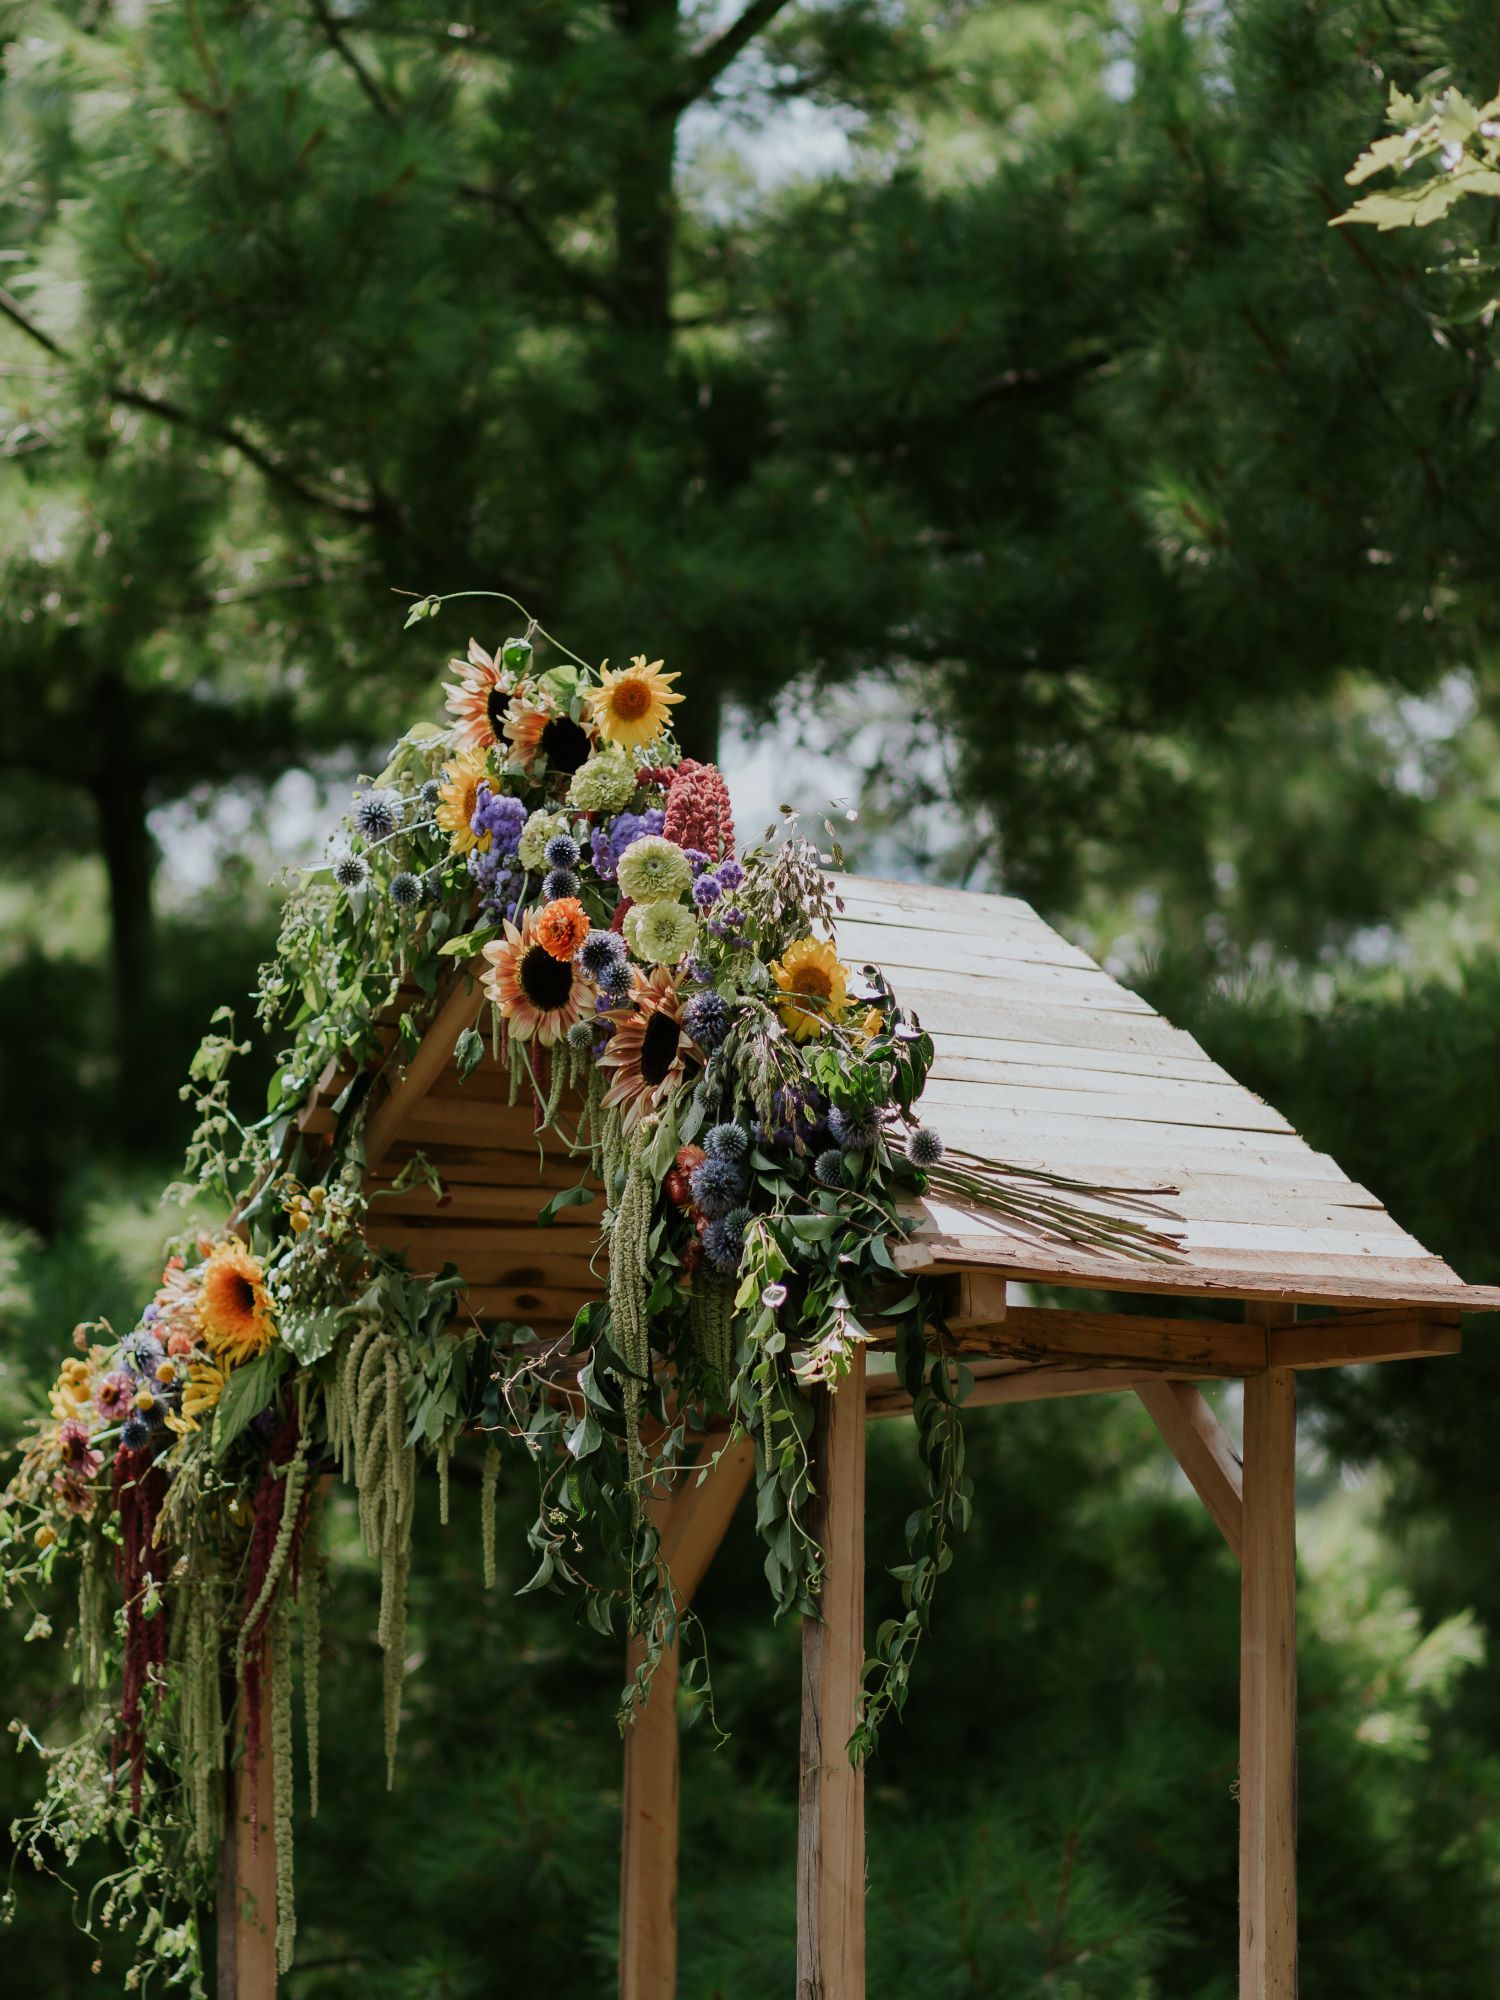 Custom designed wedding arbor with flowers